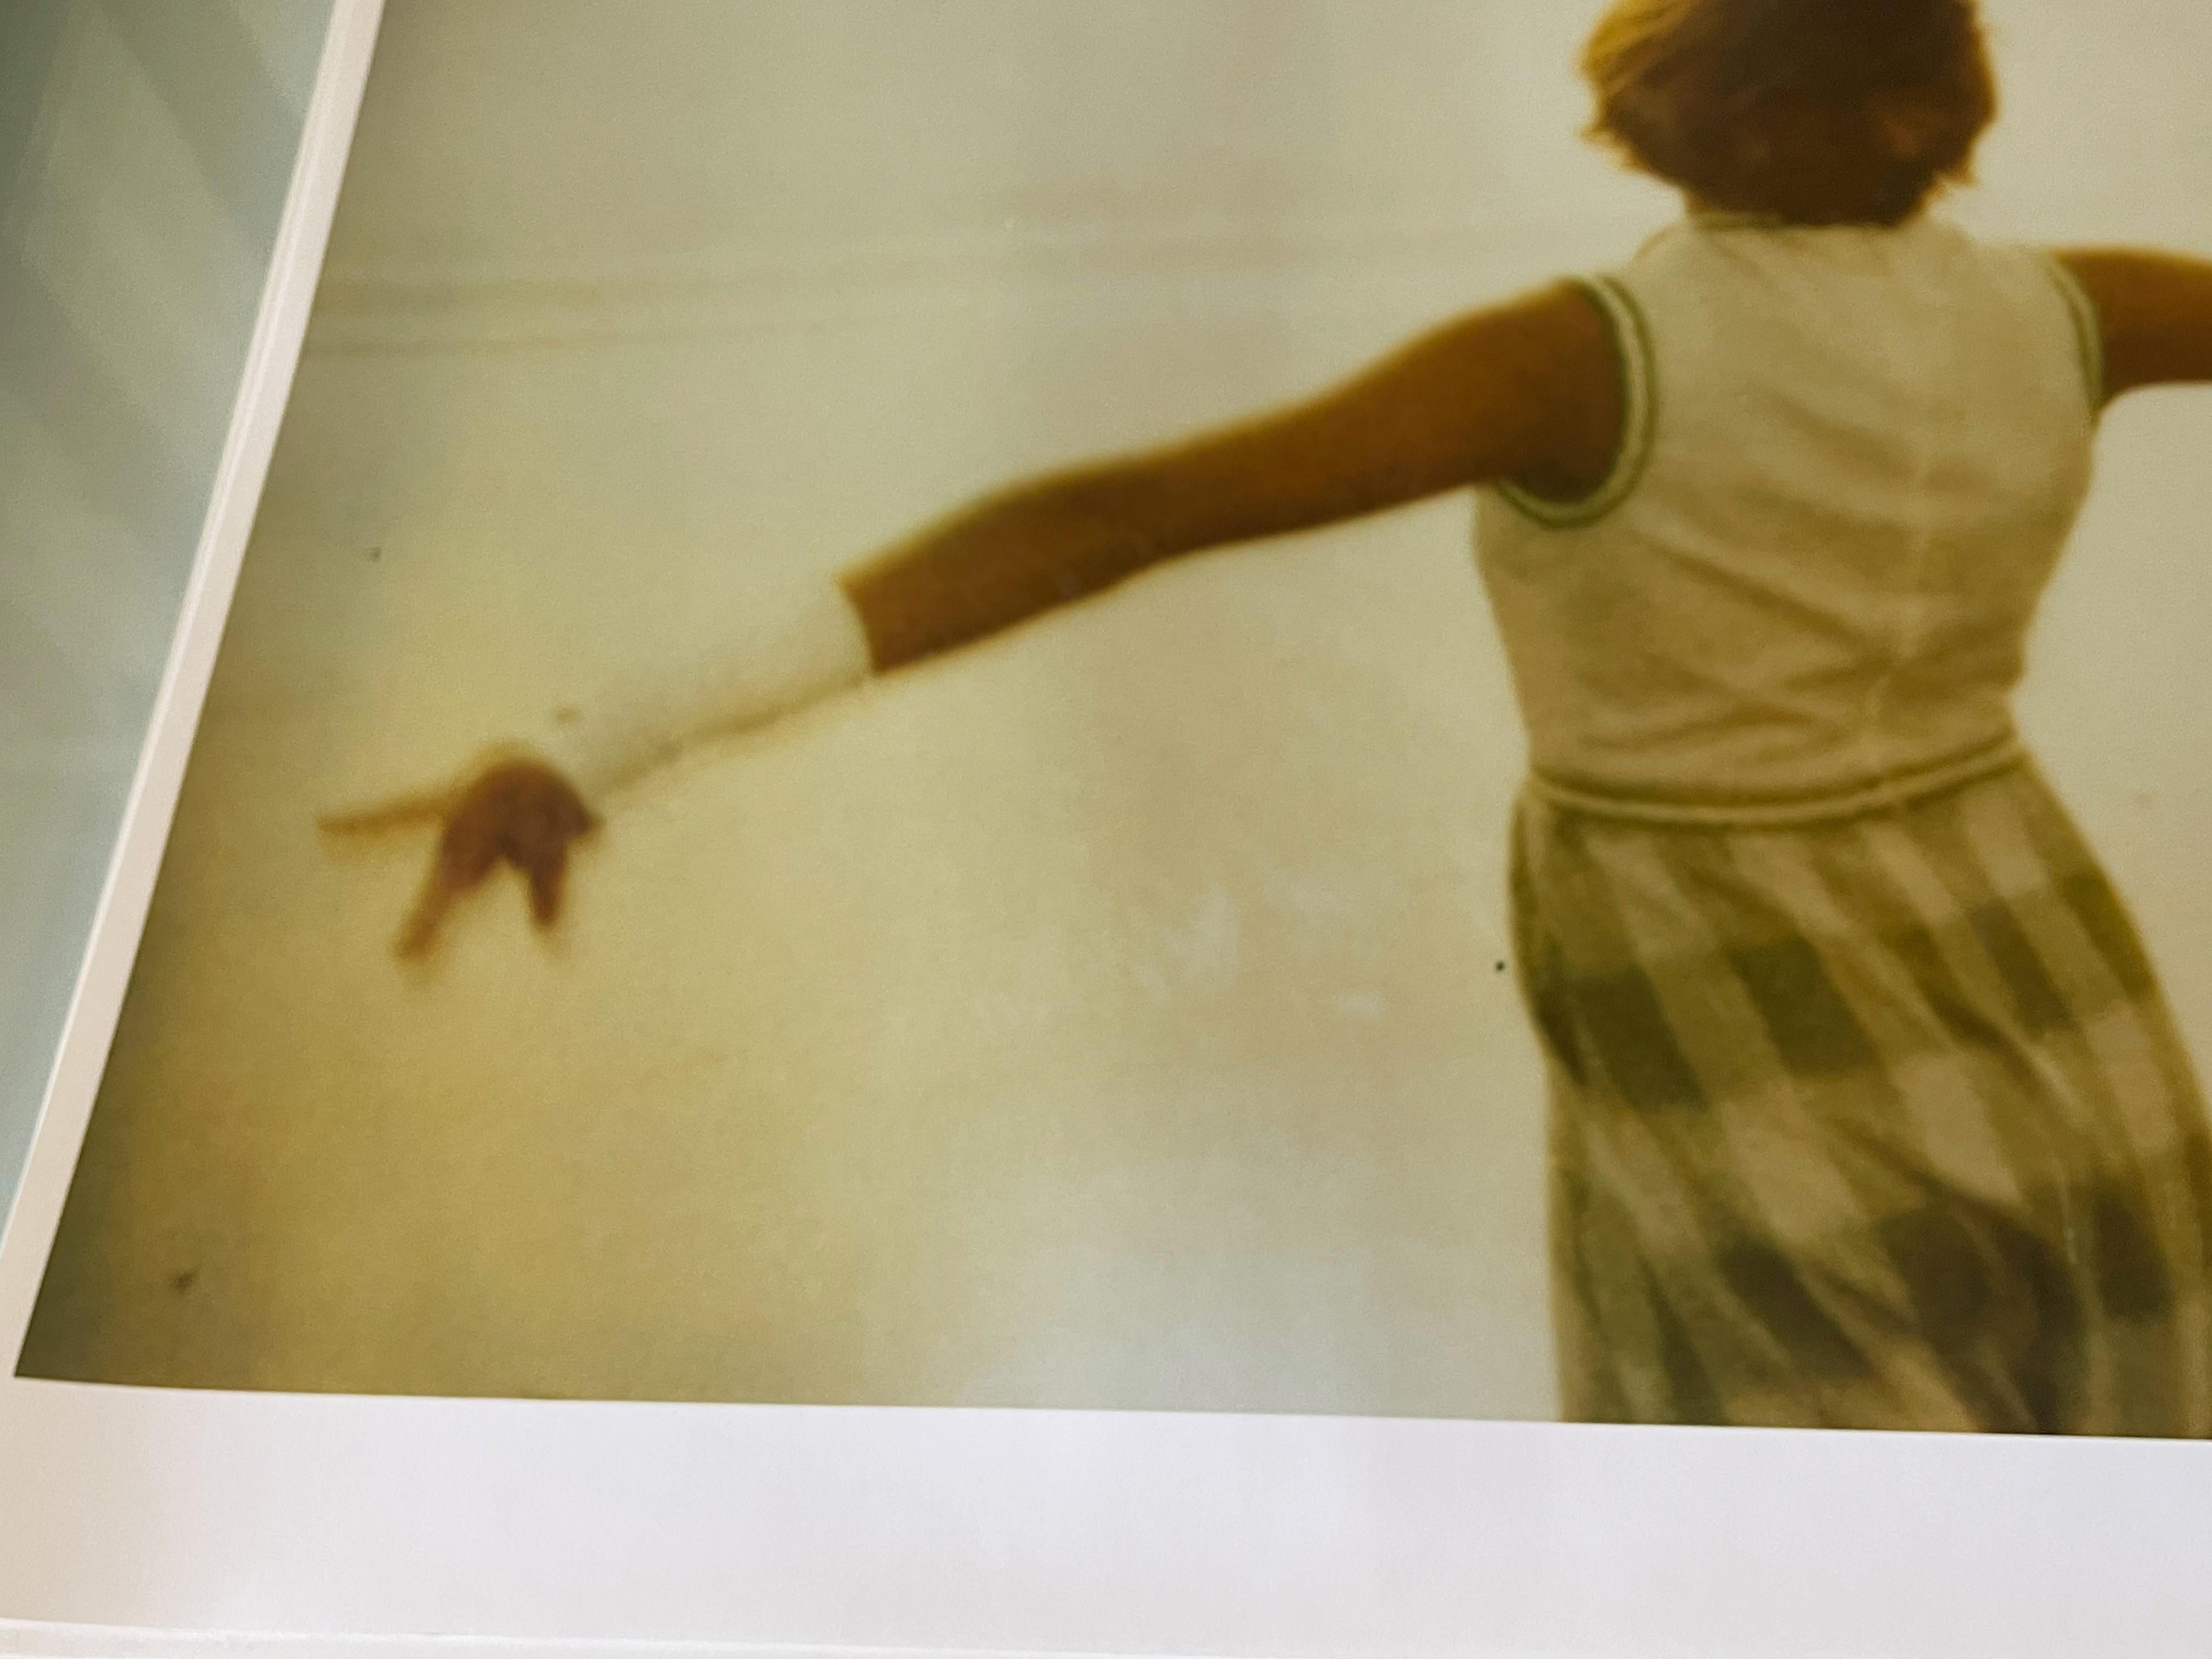 Dancer on the Beach II (Stranger than Paradise) - Analog, hand-print, Polaroid For Sale 2